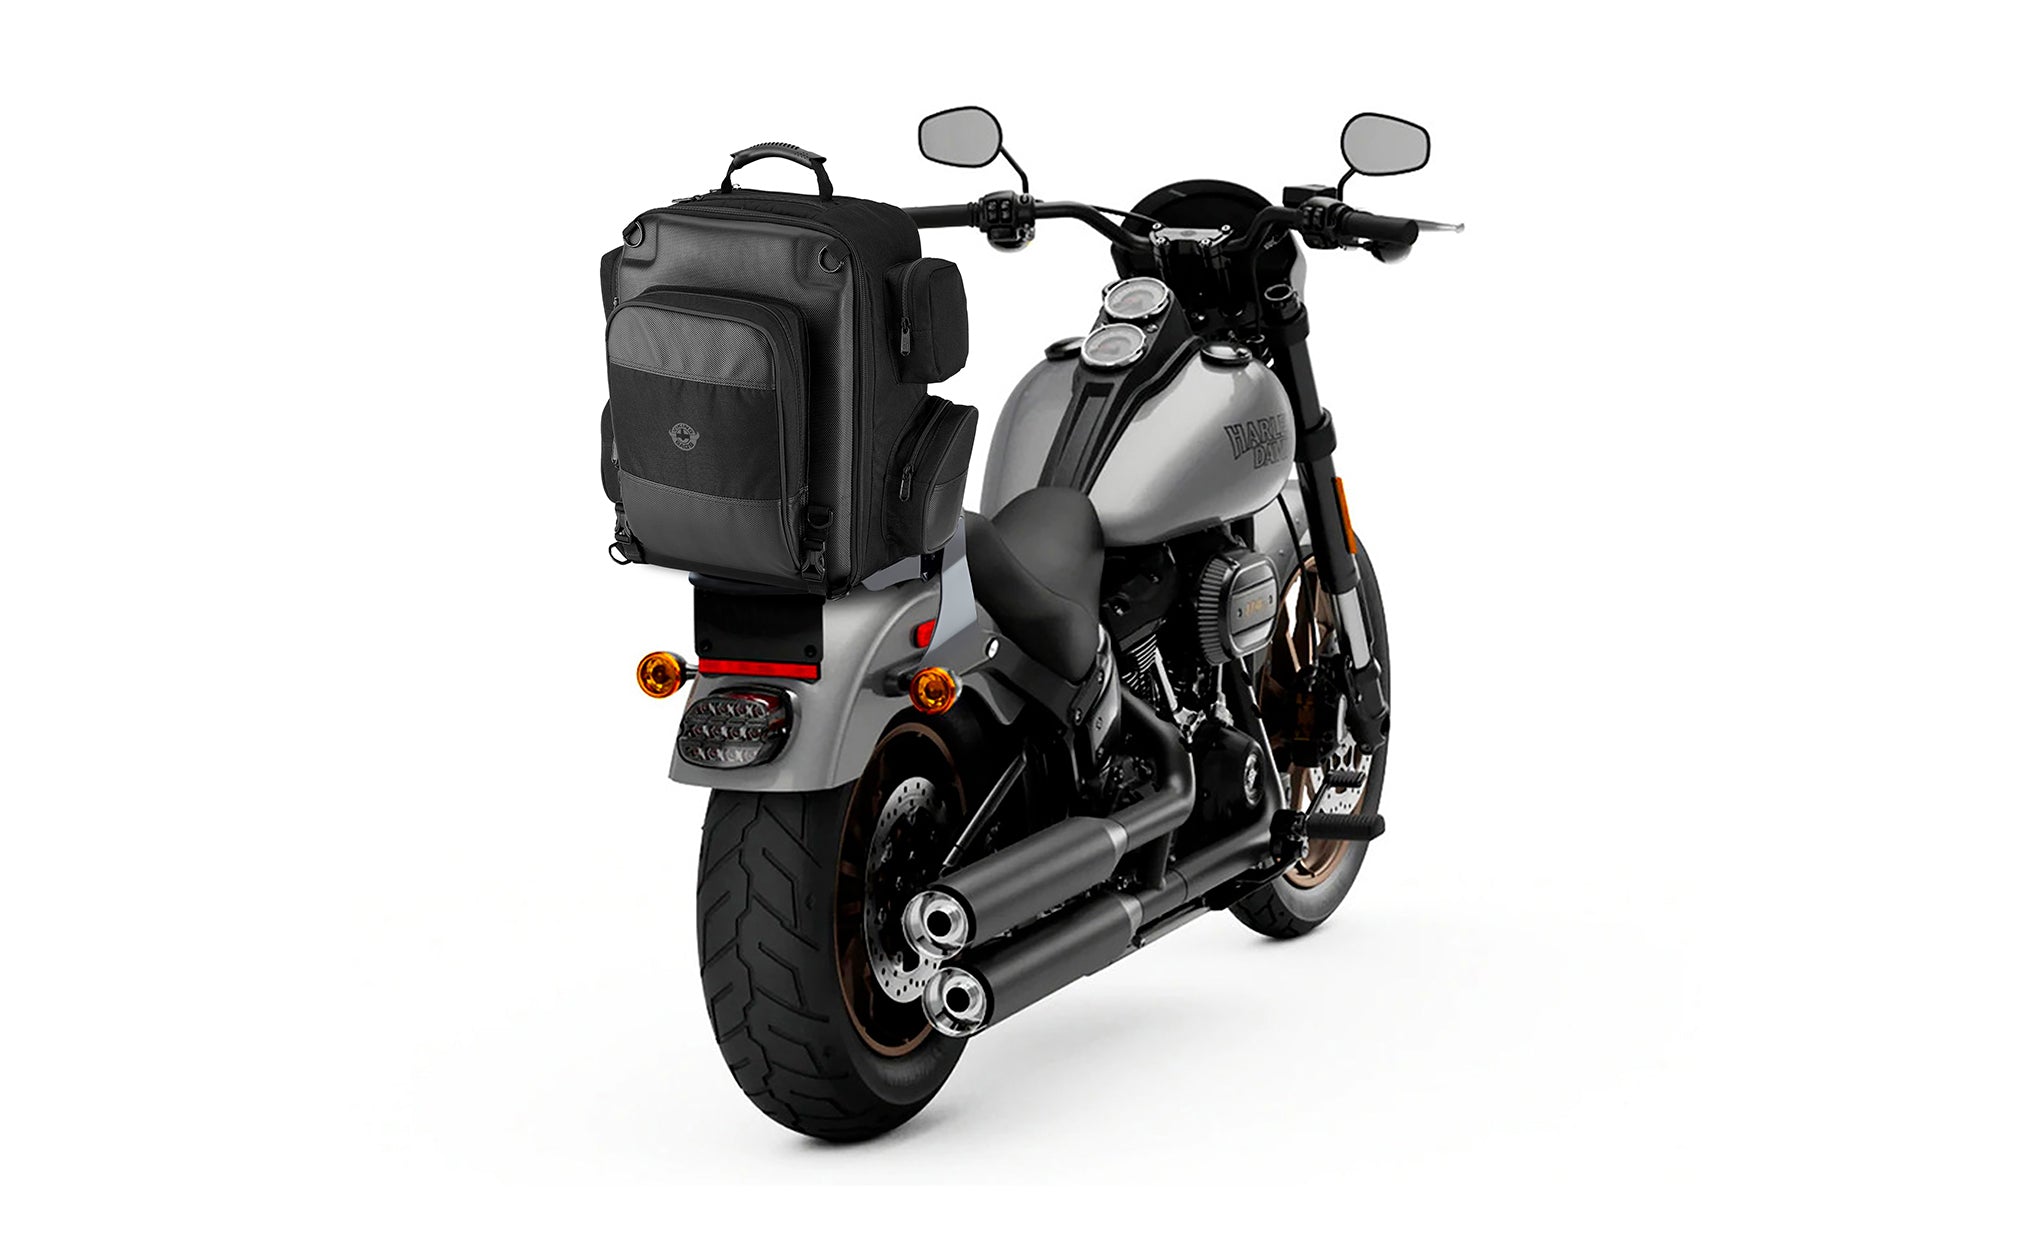 Viking Voyage Large Honda Motorcycle Backpack Bag on Bike View @expand